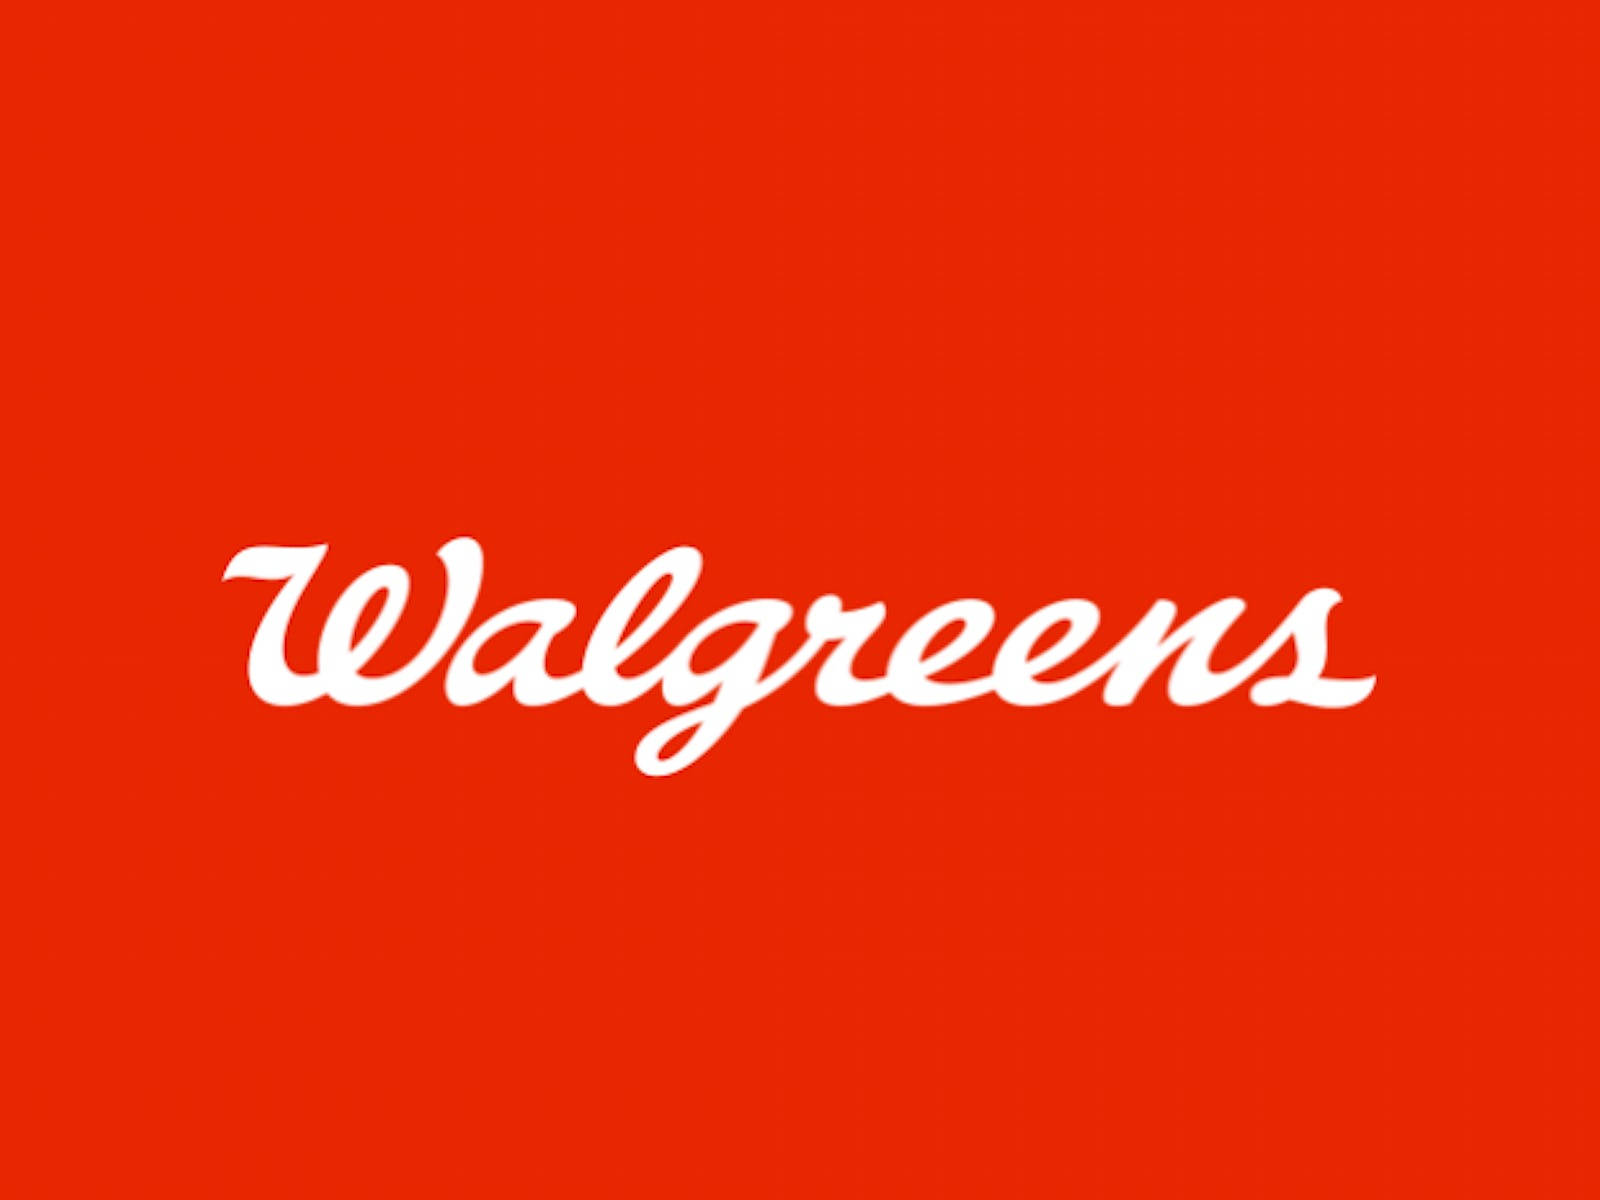 White Walgreens Logo Red Background